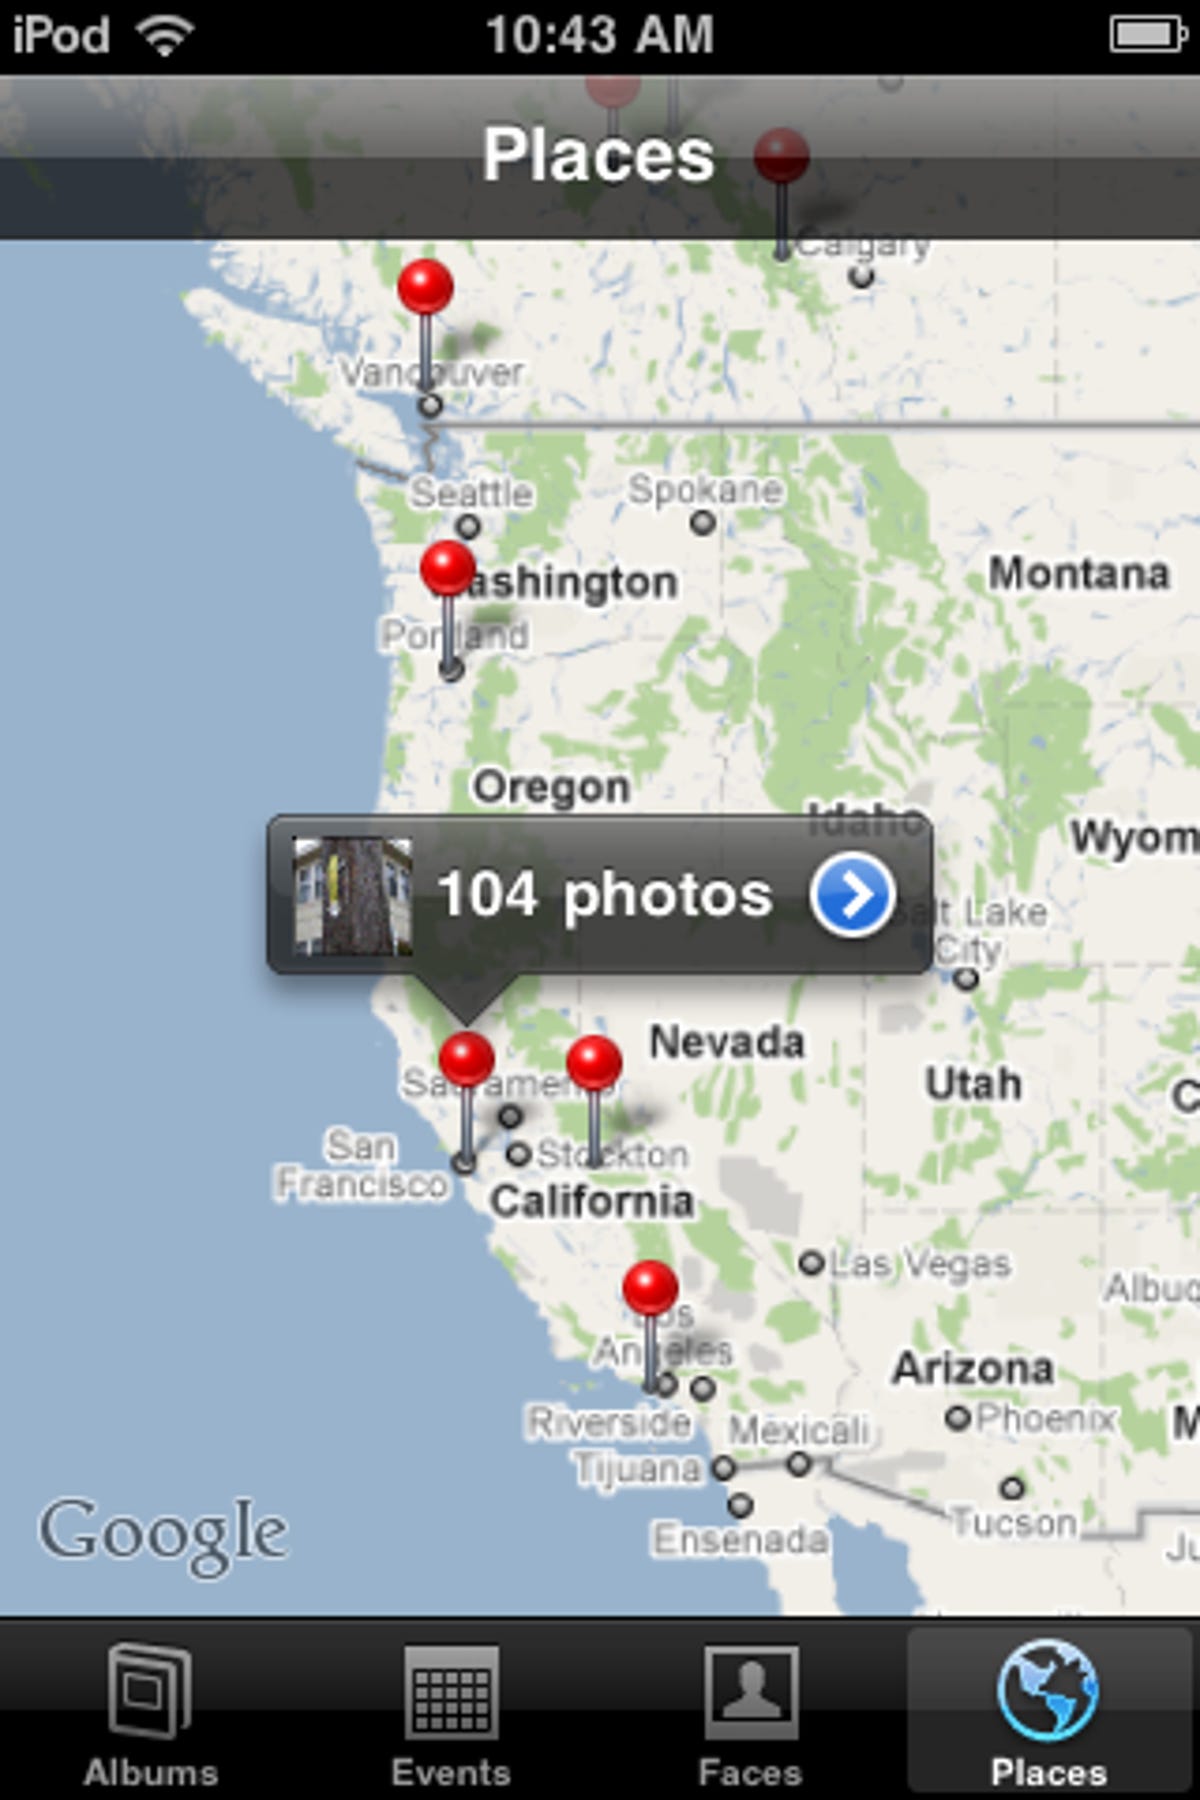 Geolocationimages_iOS4Slideshow_06212010_1.png